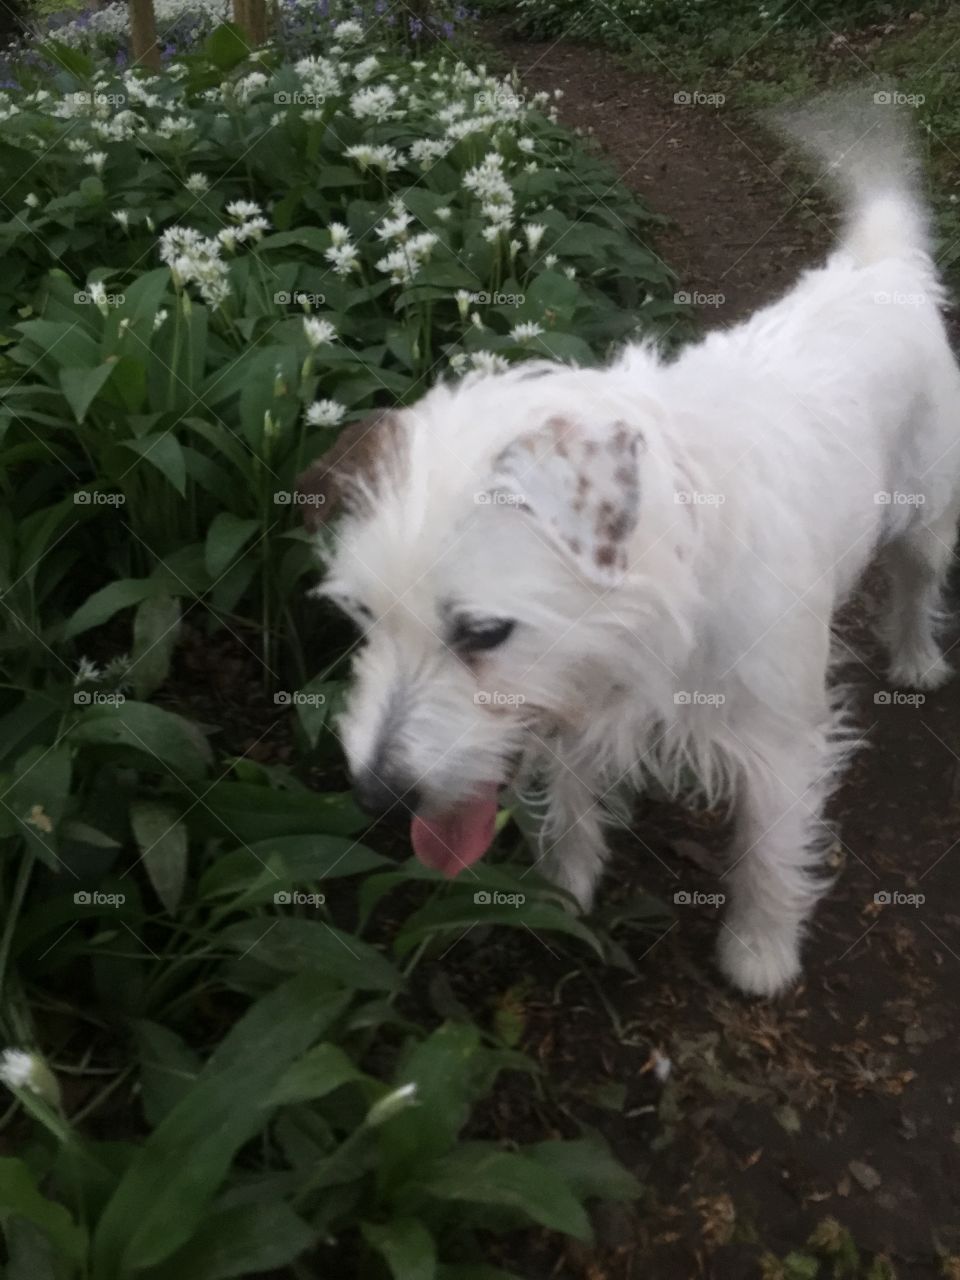 Dog in the wild garlic